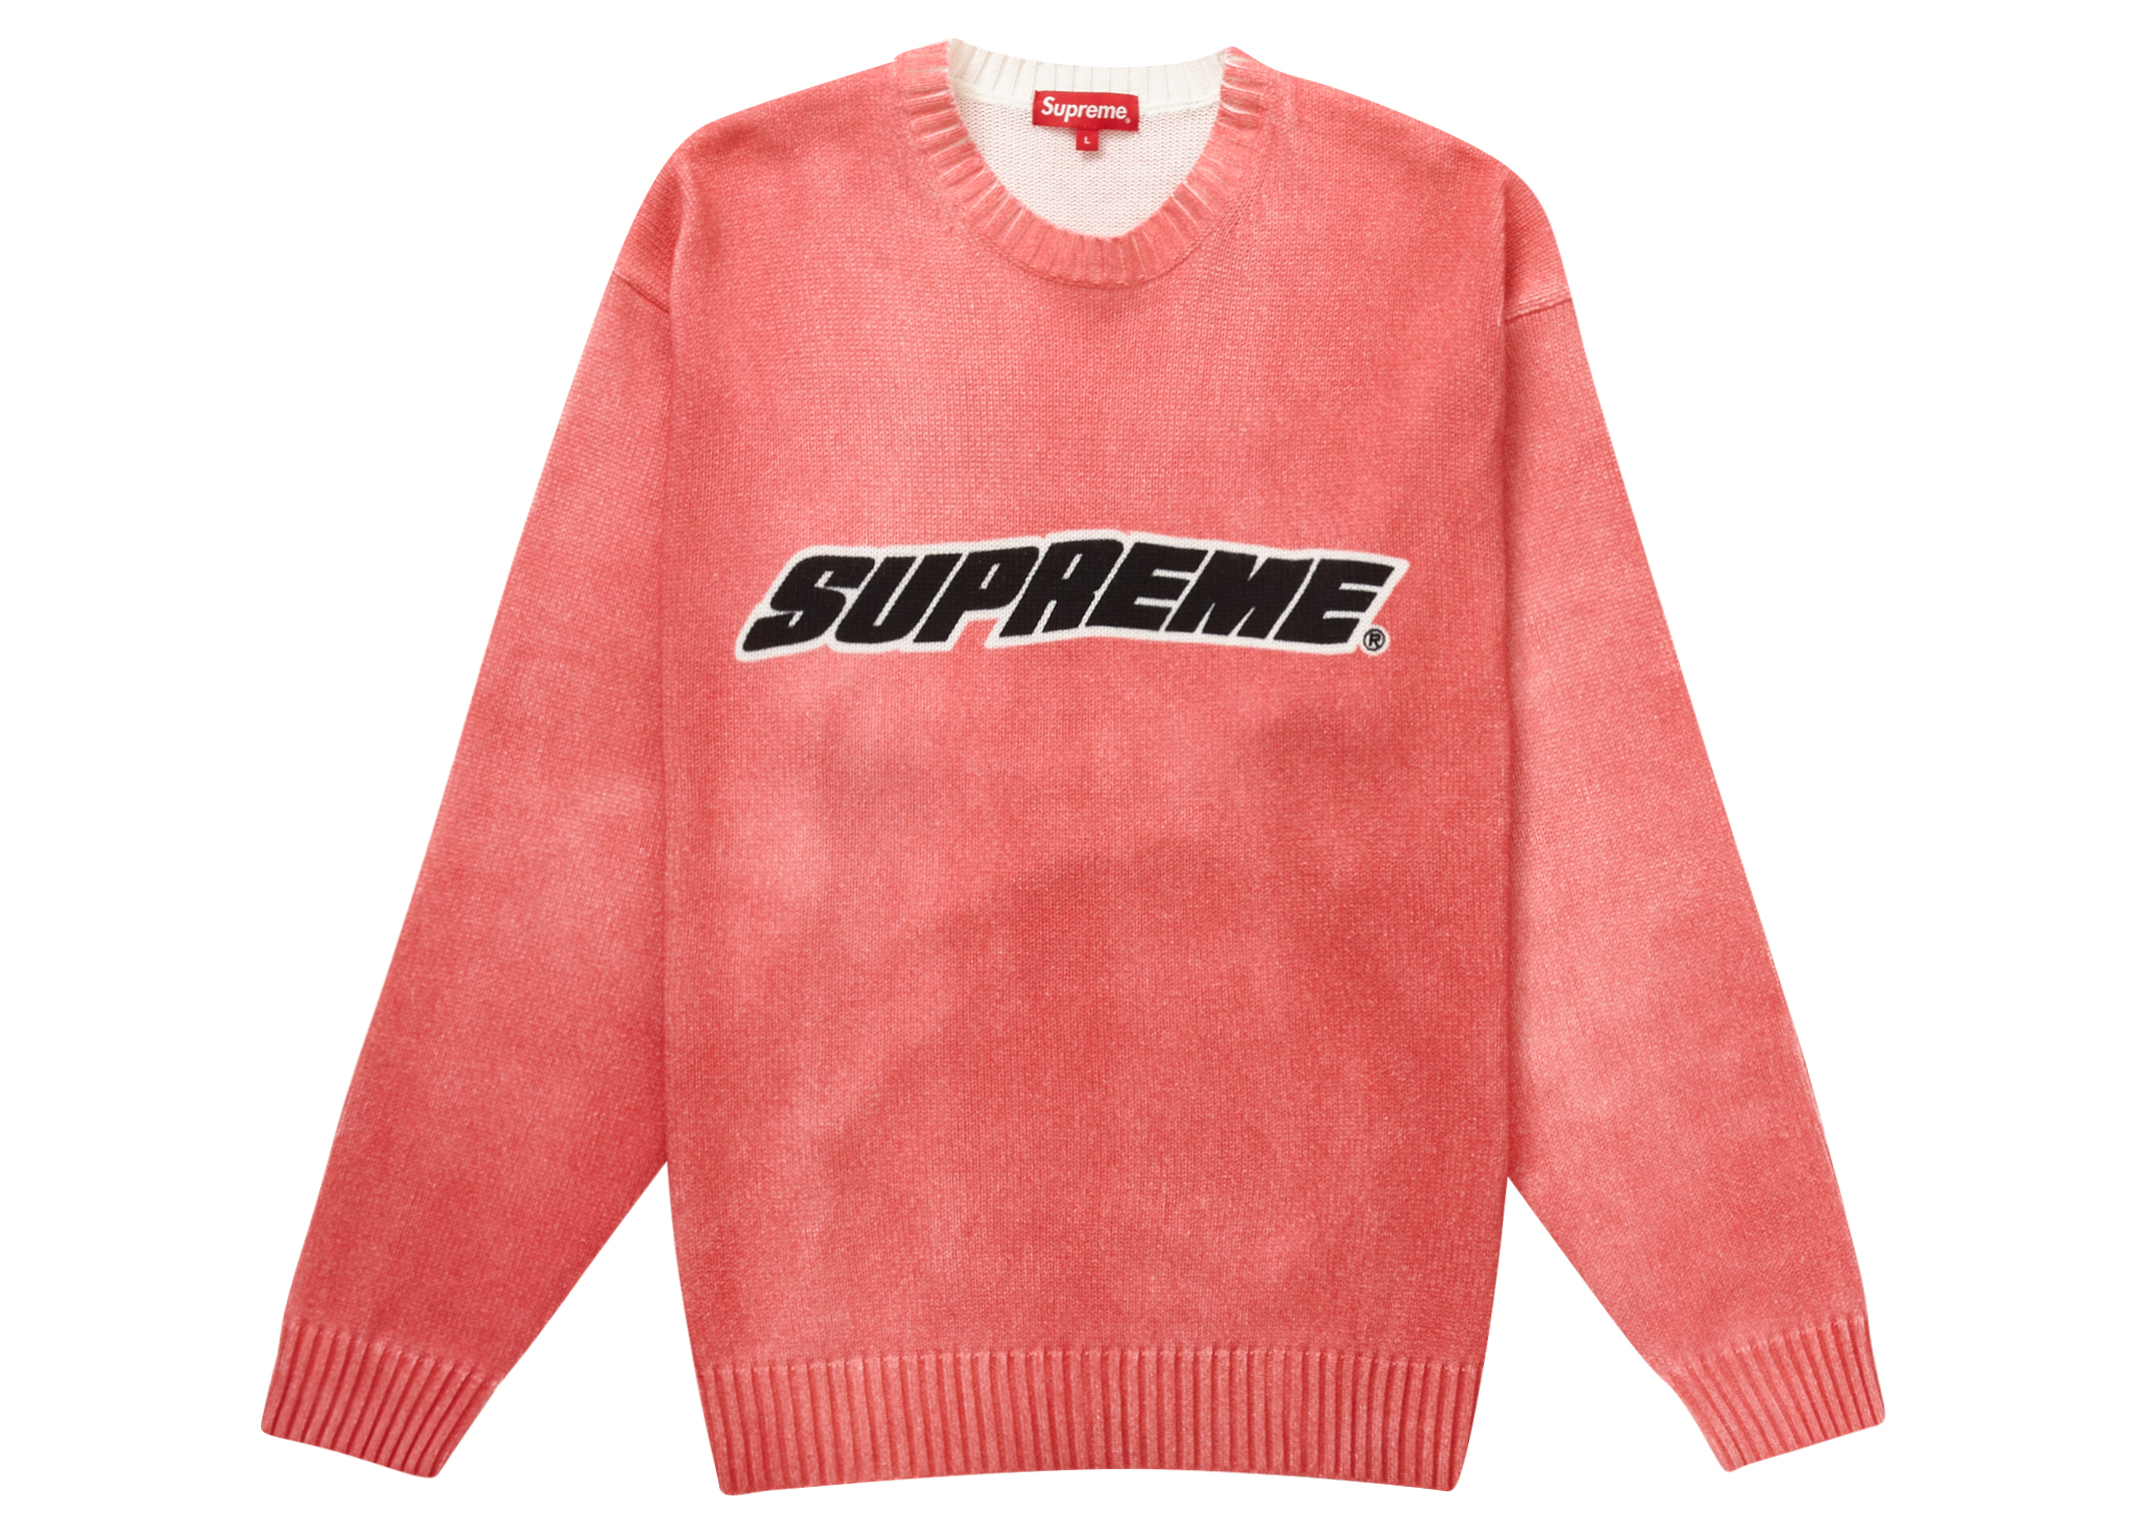 Supreme Printed Washed Sweater素材ニット